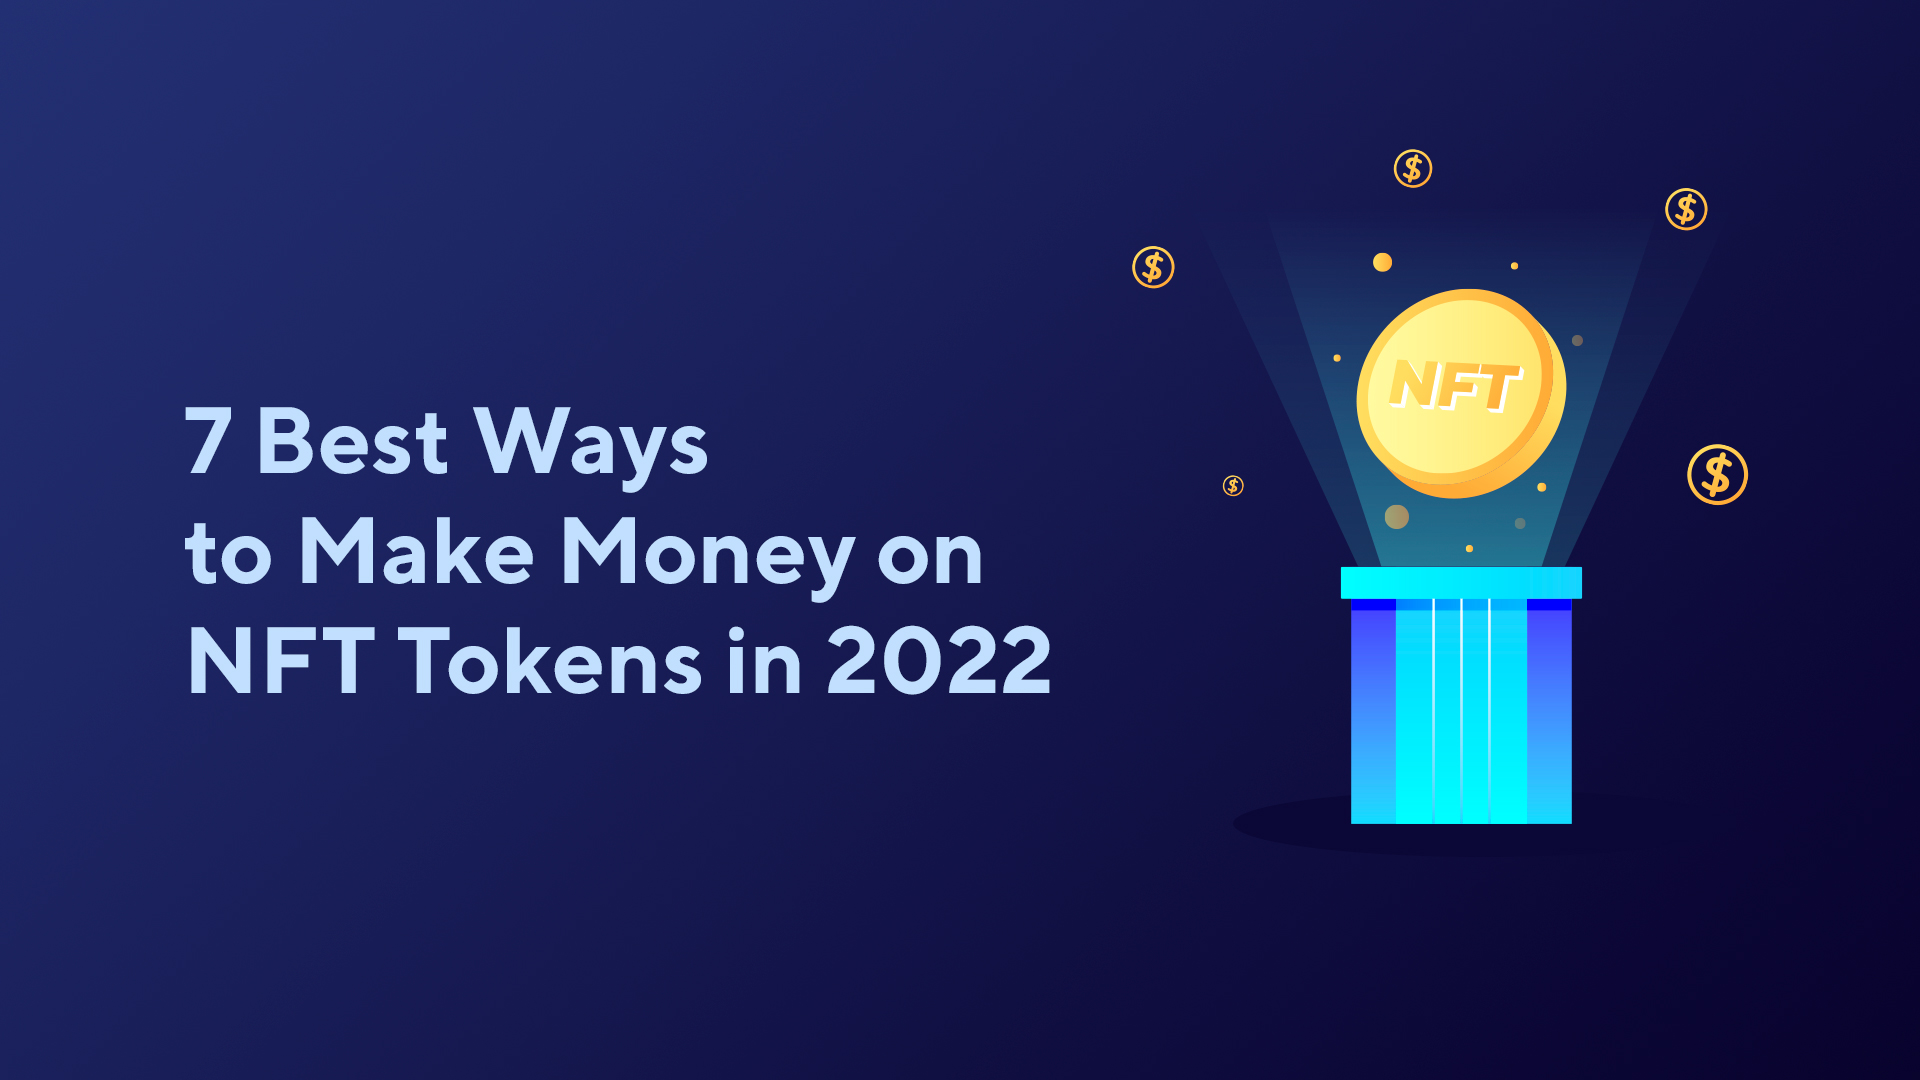 7 Best Ways to Make Money on NFT Tokens in 2022